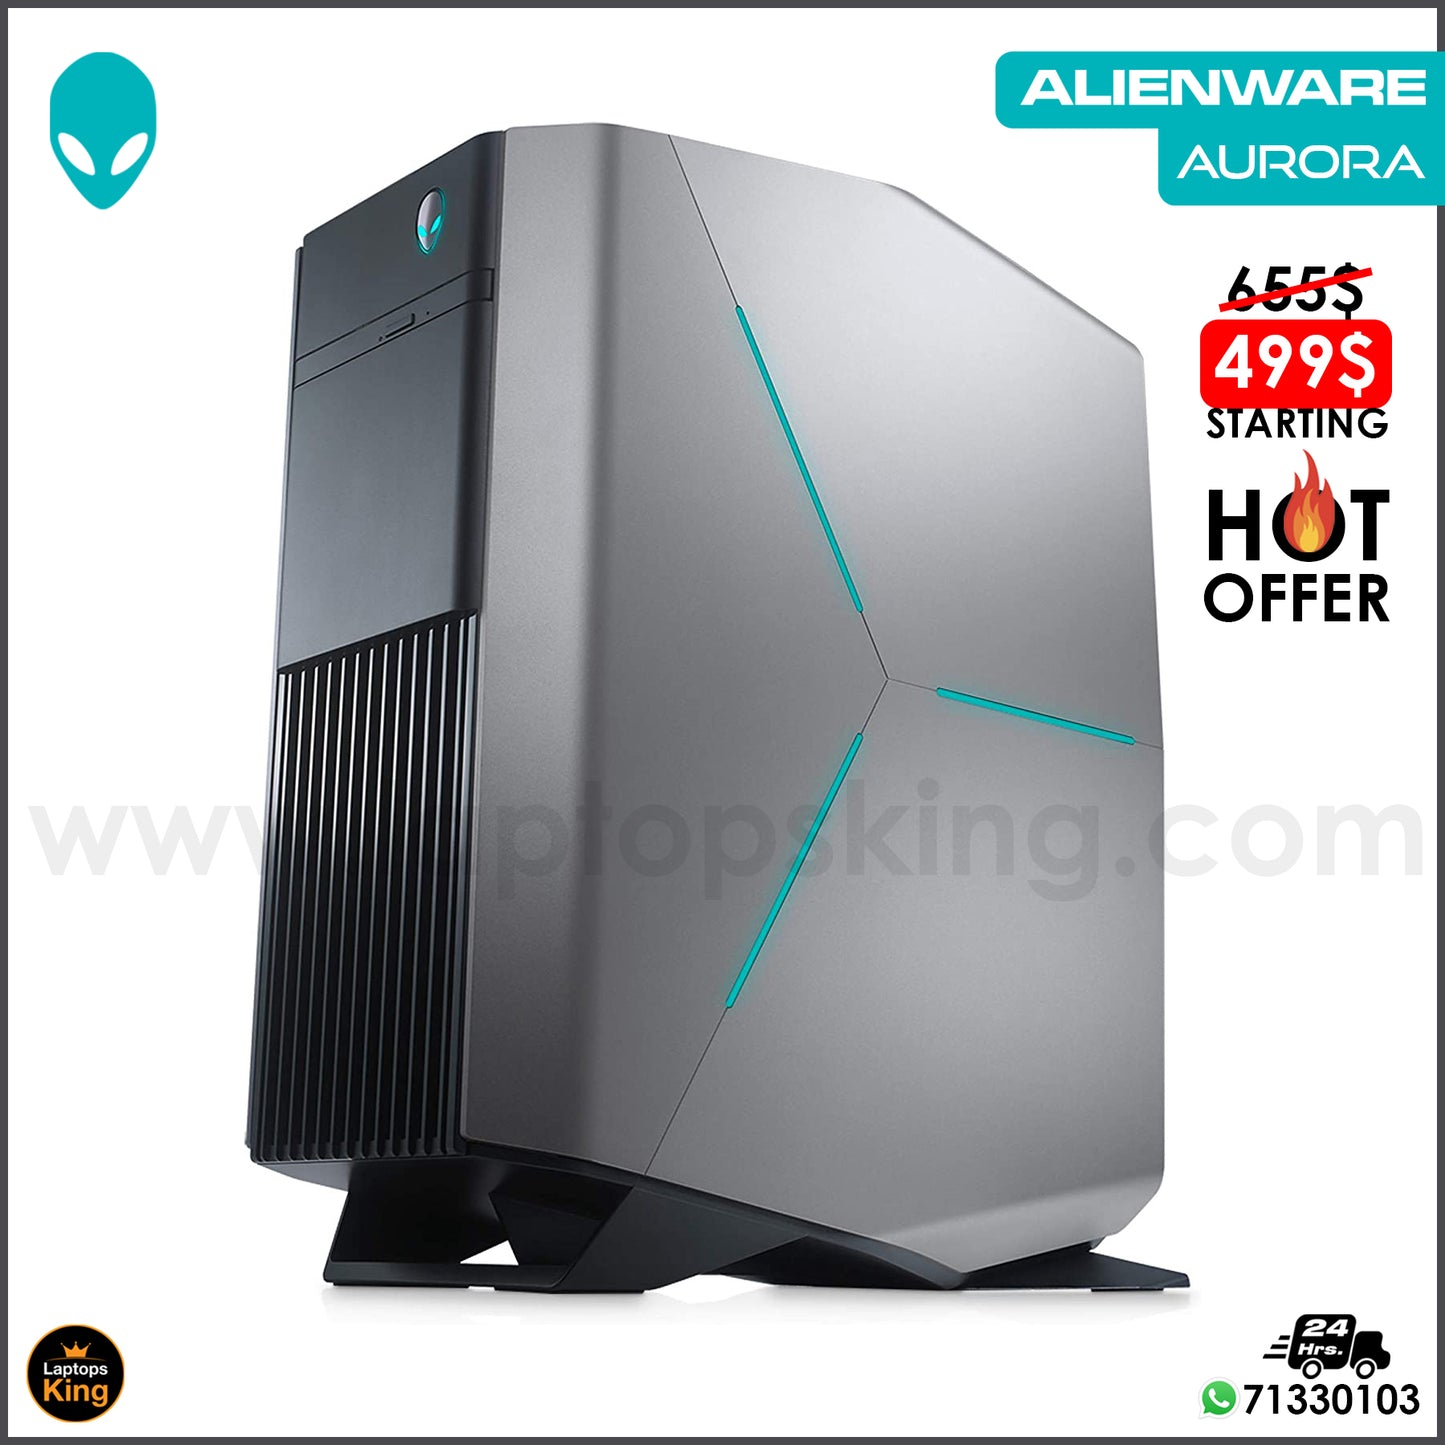 Alienware Aurora - Silver - Gaming Desktop Offers (Open Box)